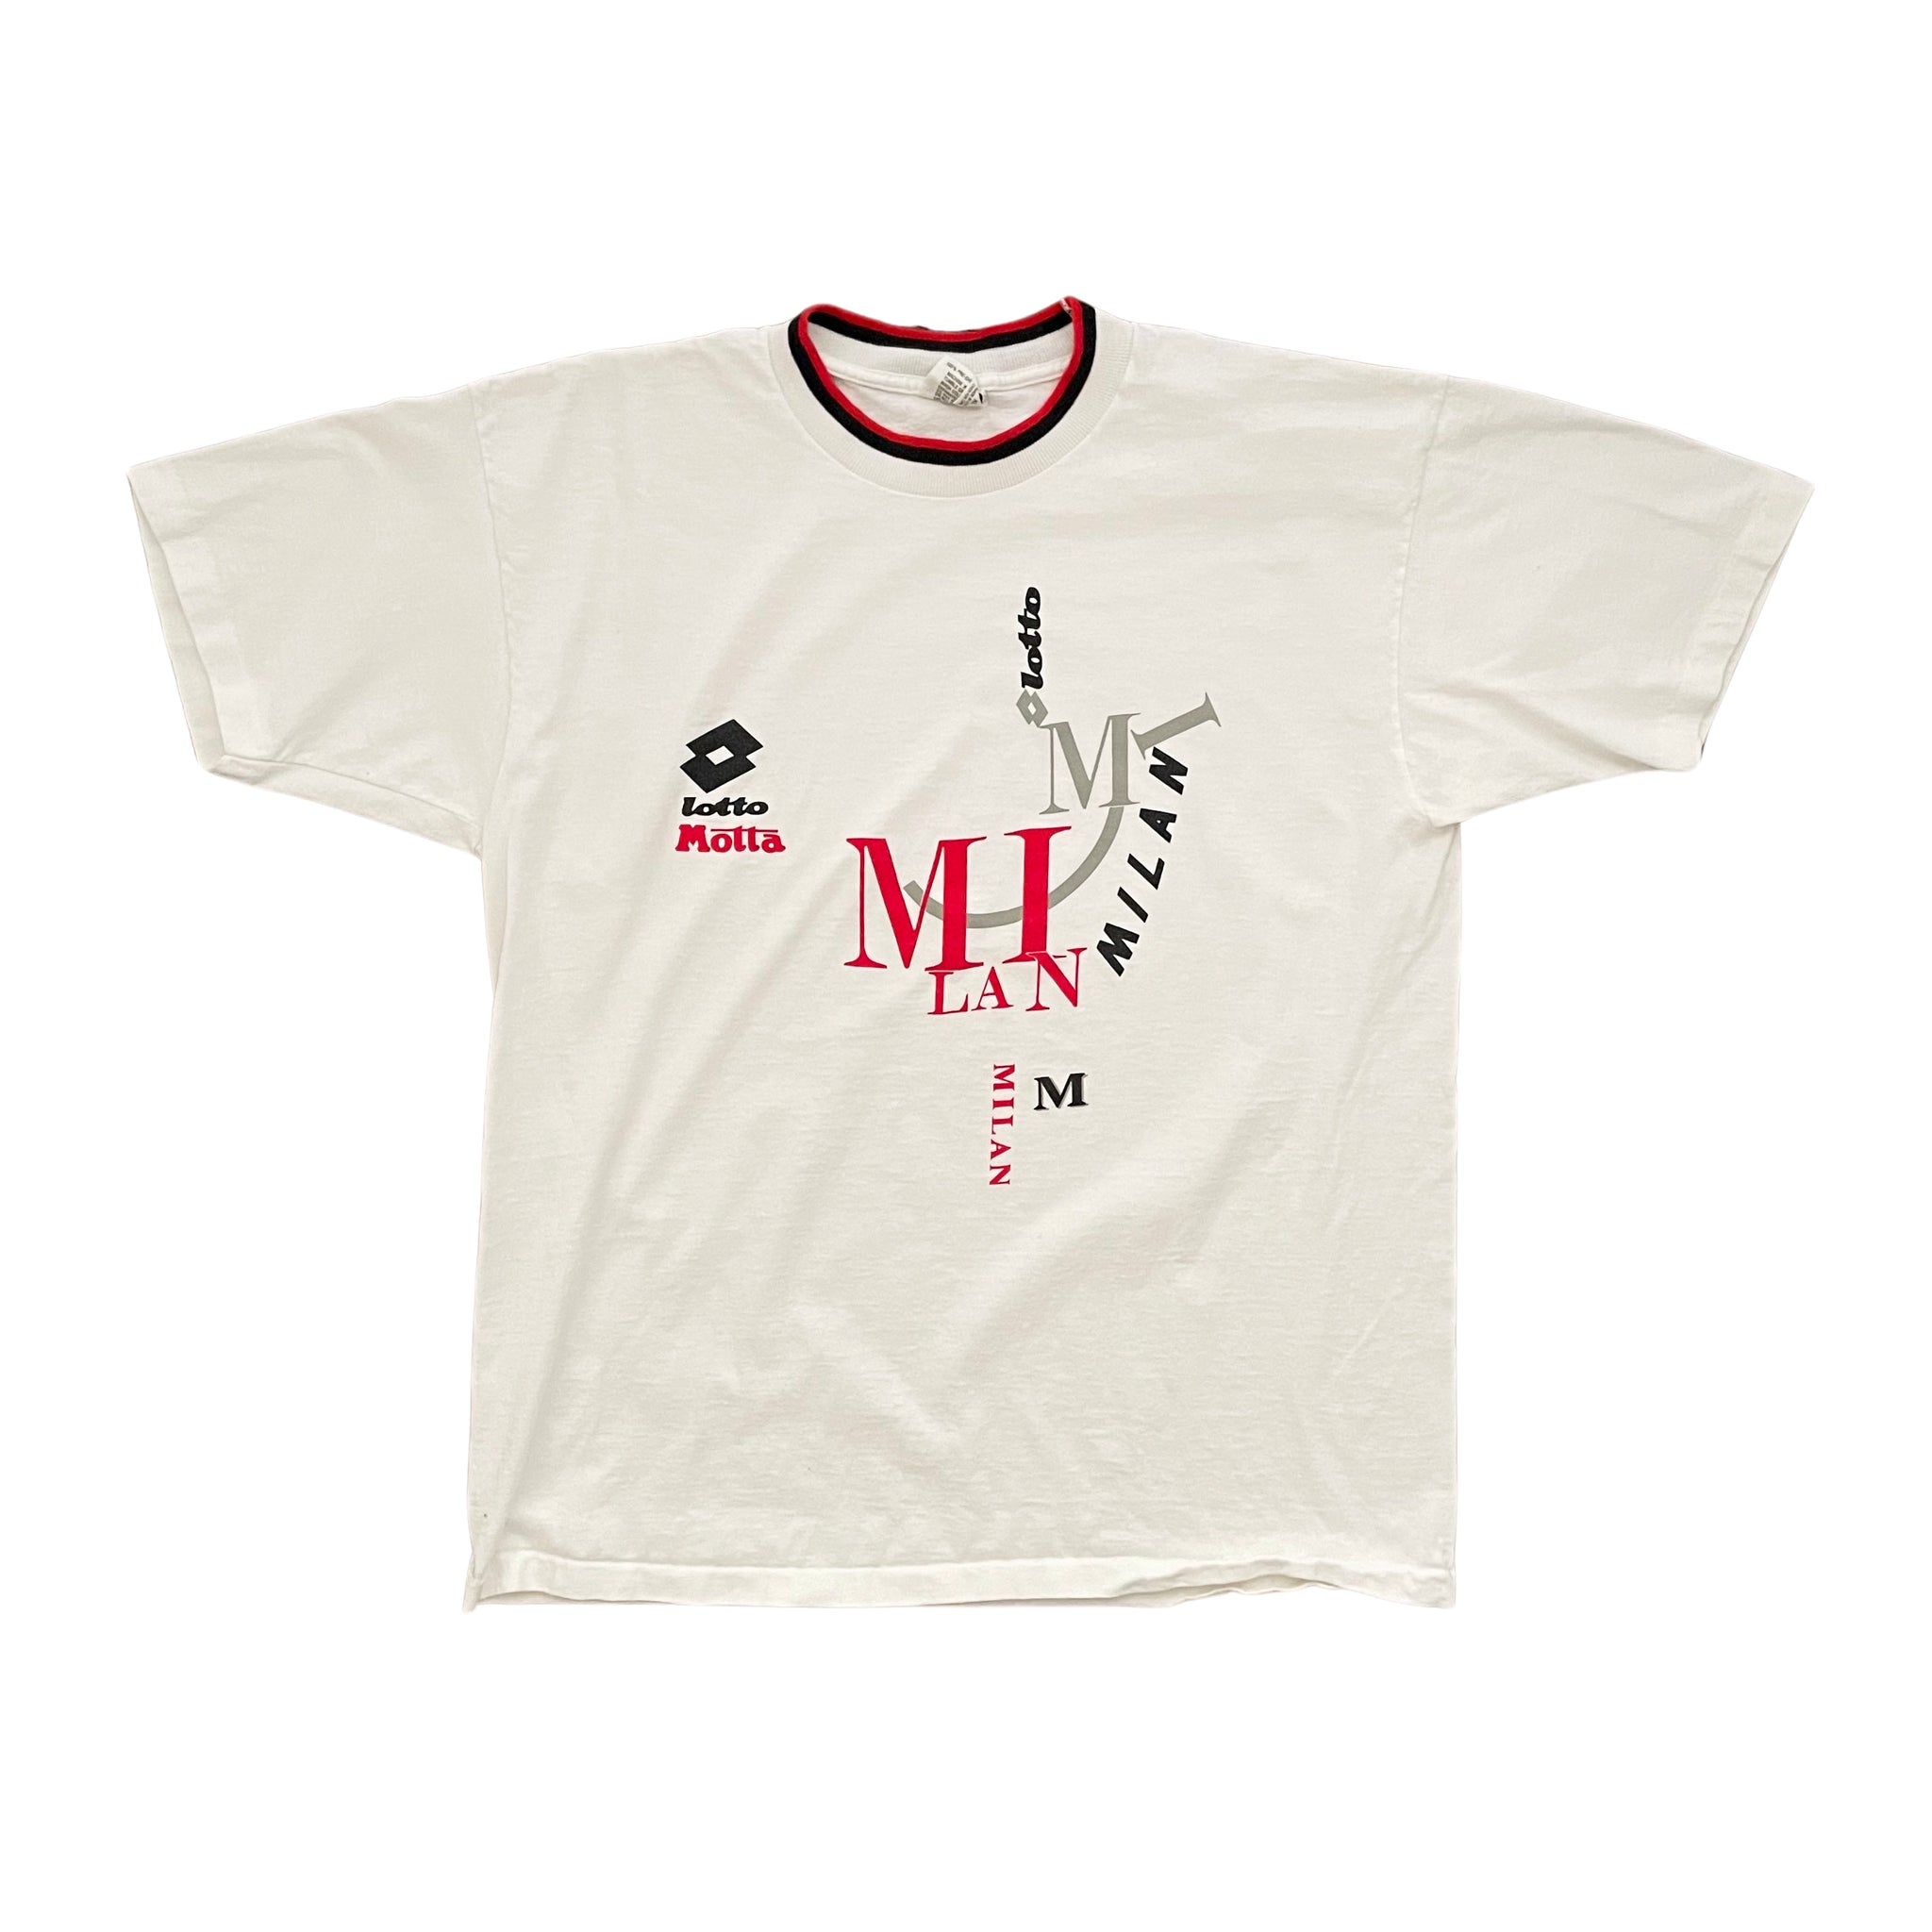 Lotto AC Milan Lifestyle Shirt - XL